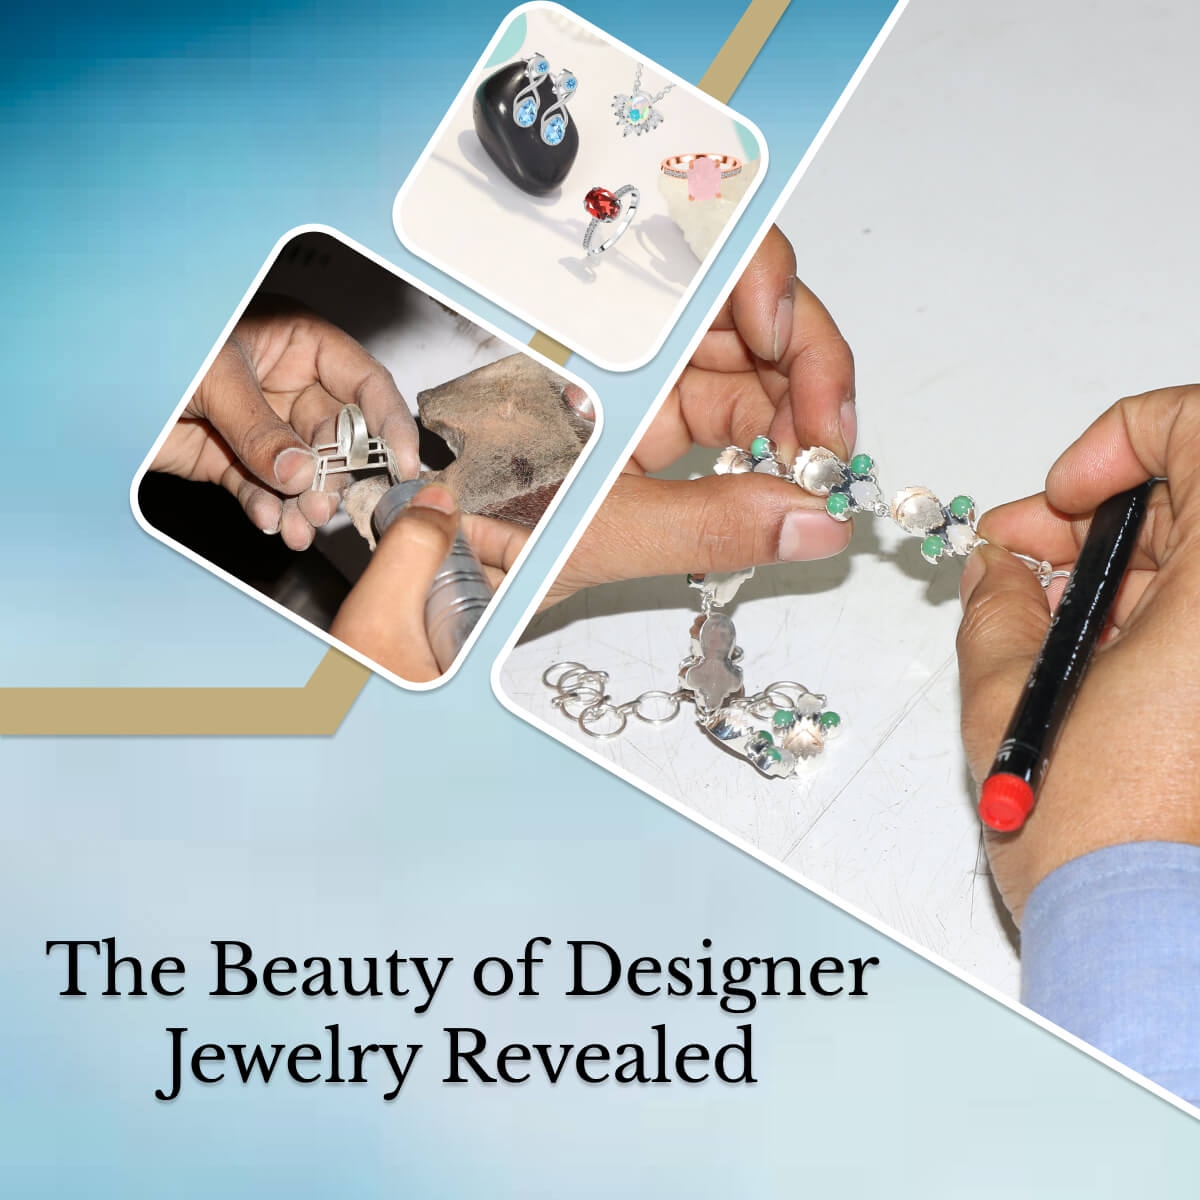 Defining Designer Jewelry